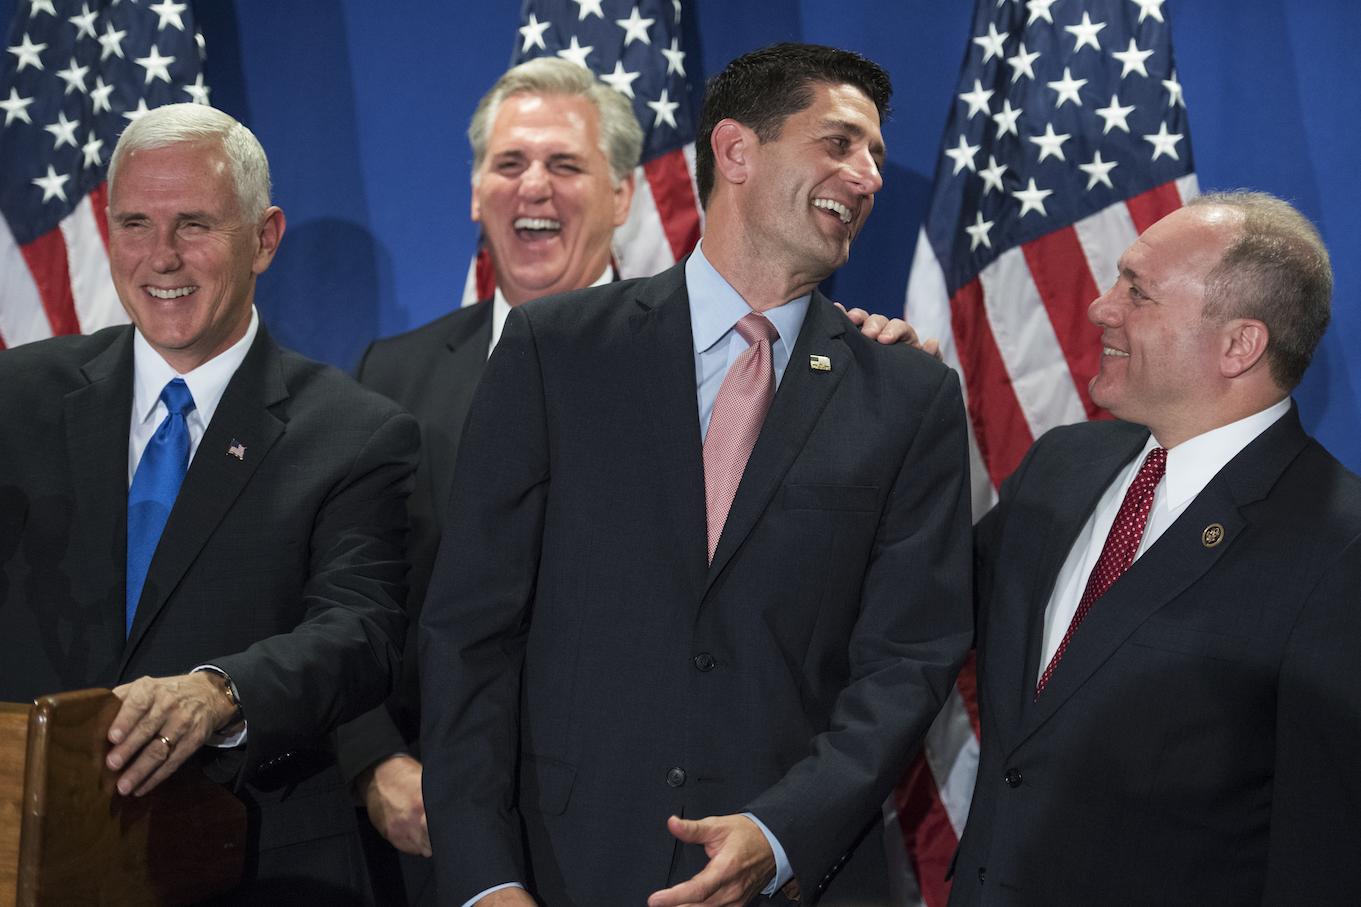 Republicans laugh